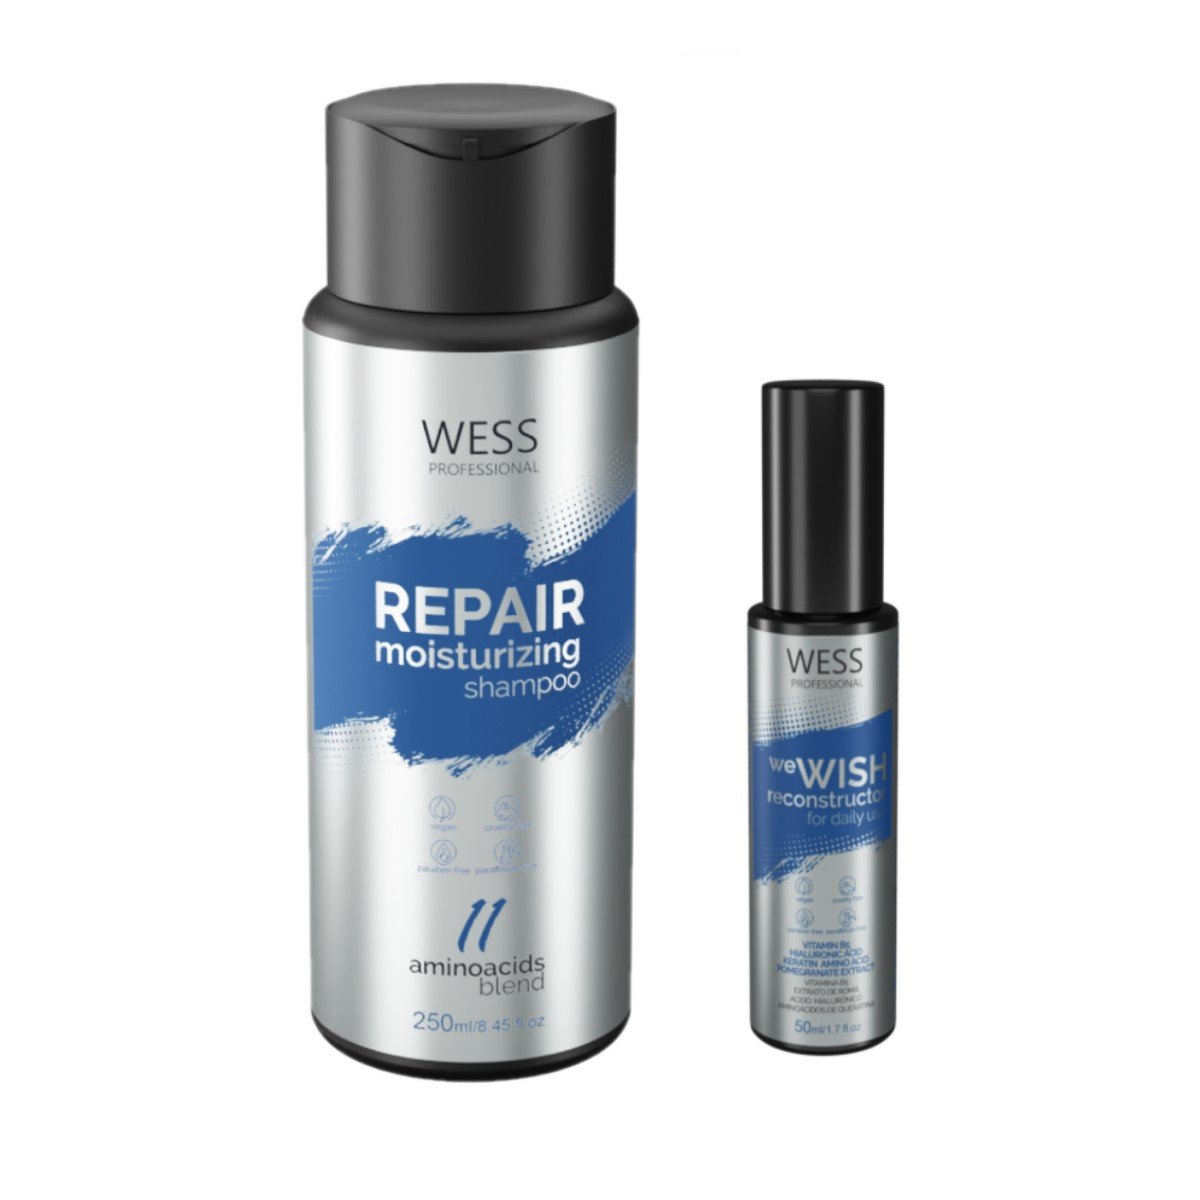 Kit Wess Repair Shampoo 250ml + We Wish Reconstrutor 50ml